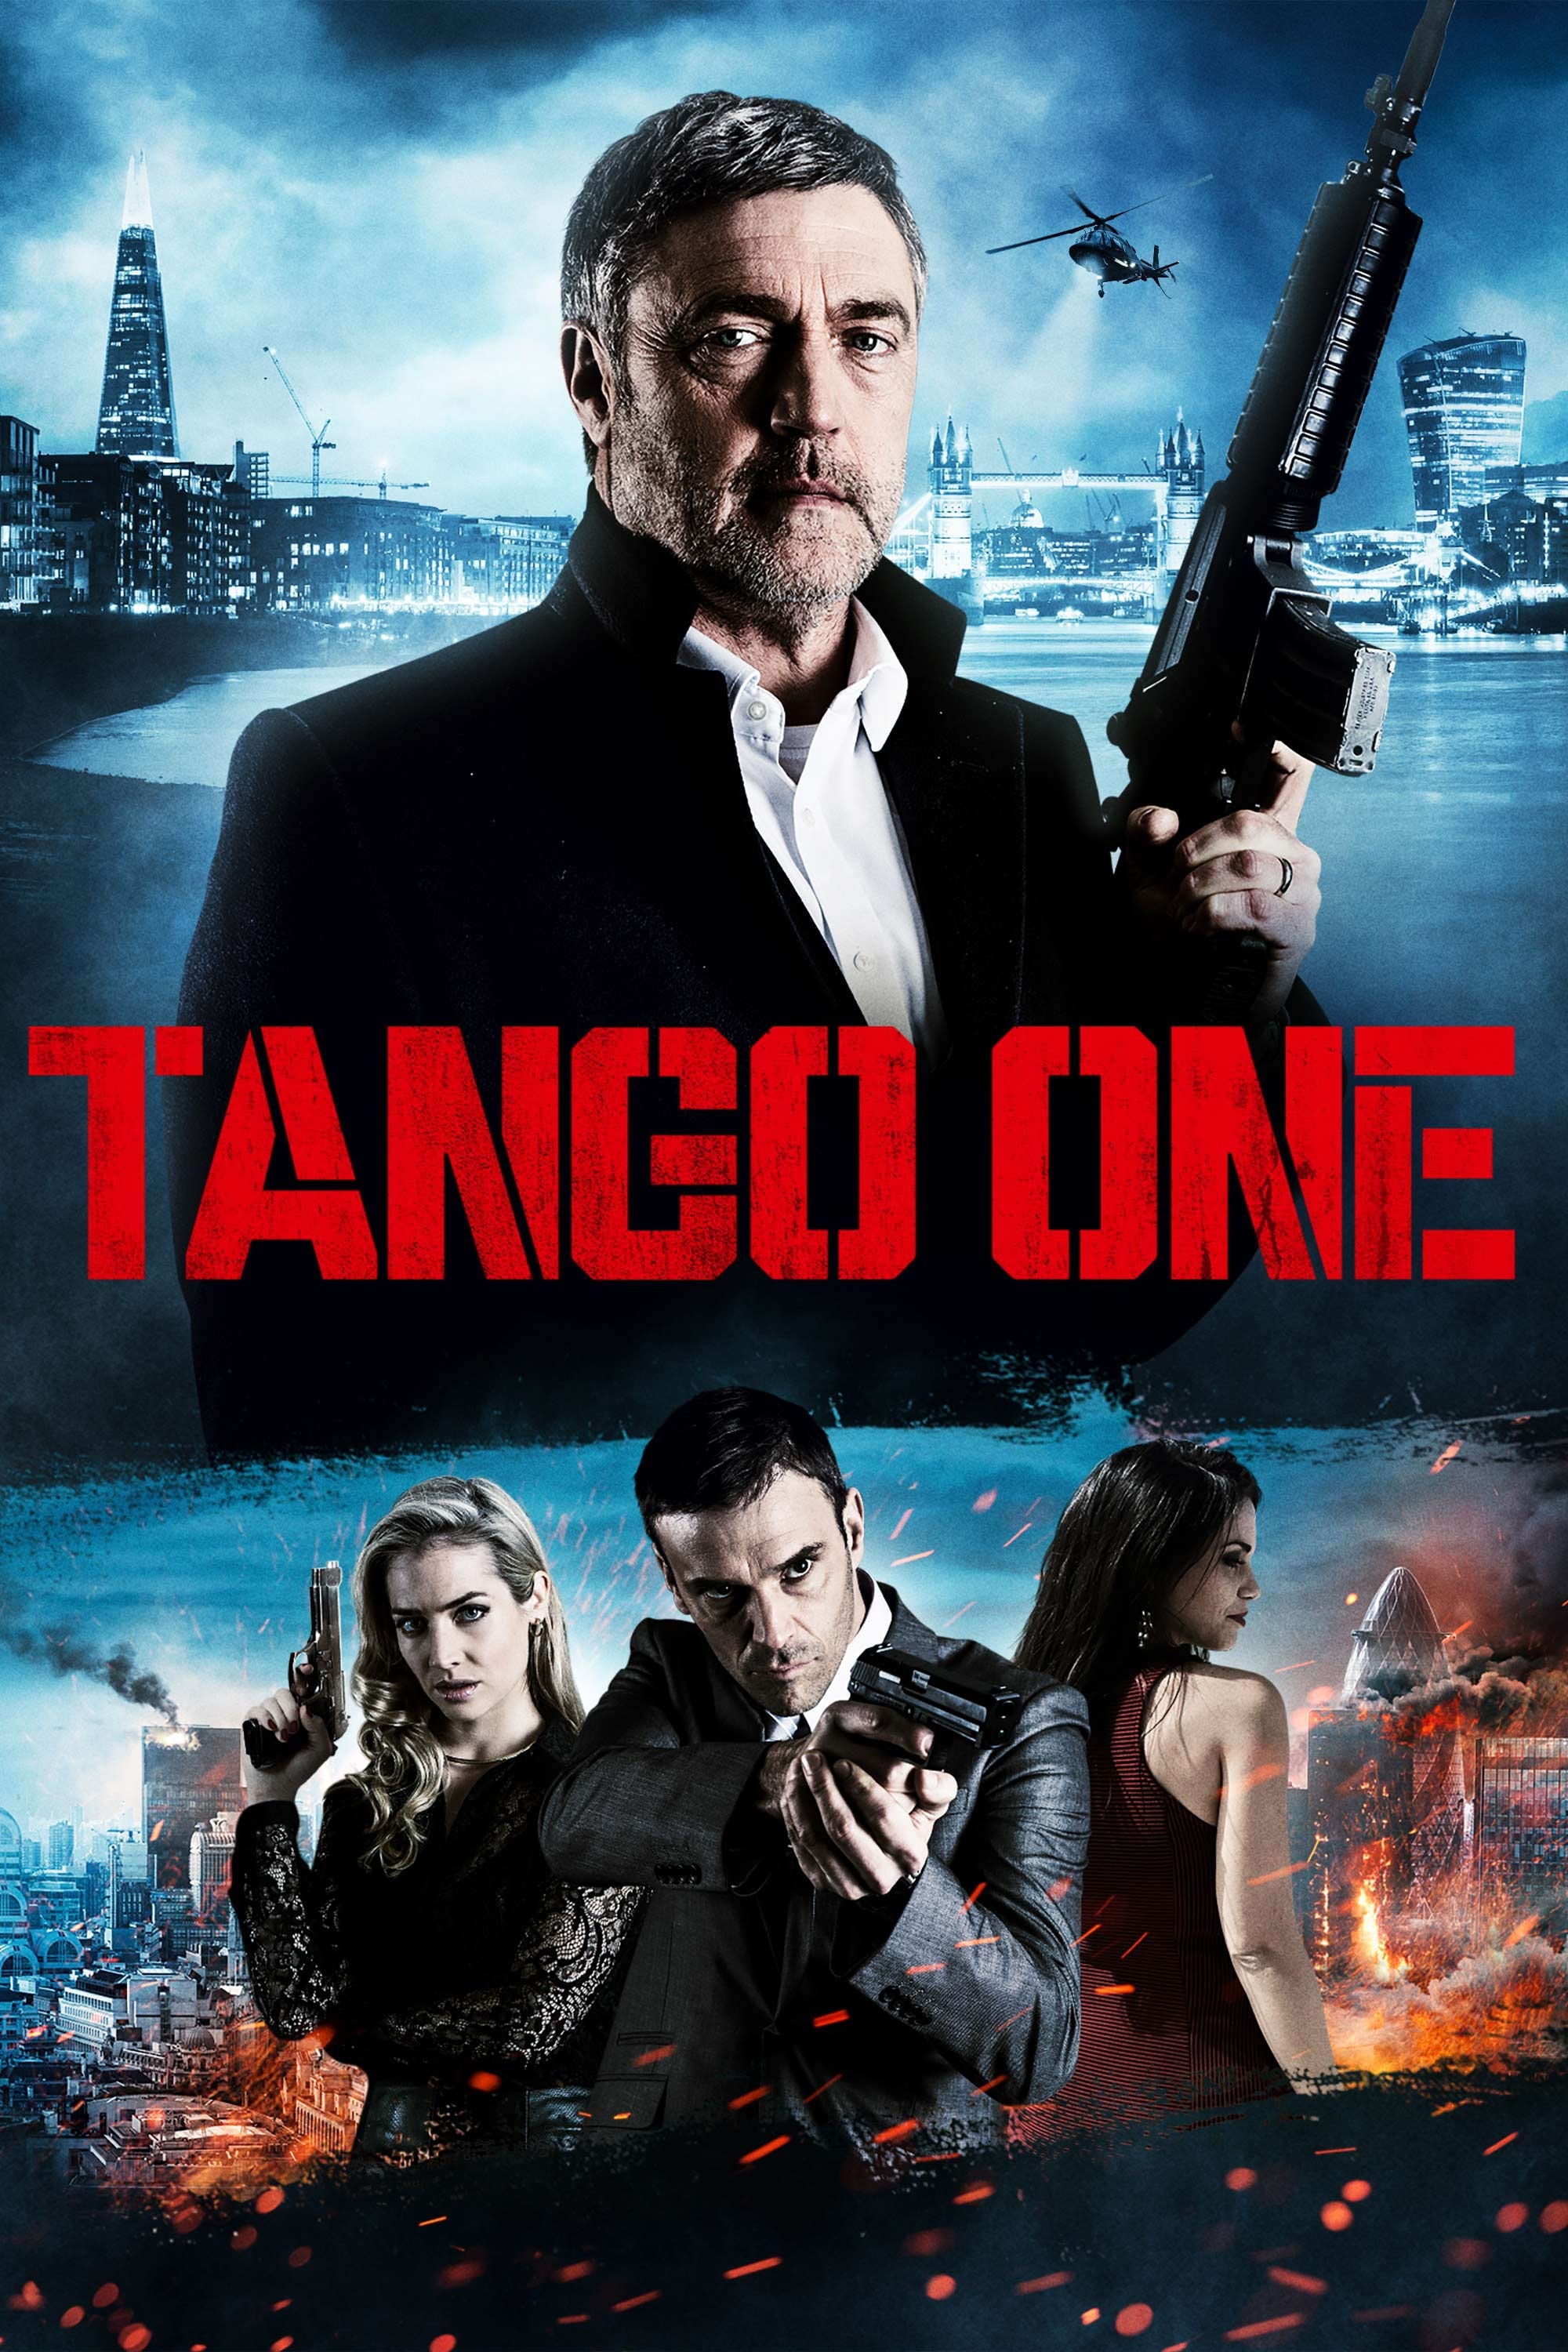 Tango One (2018)